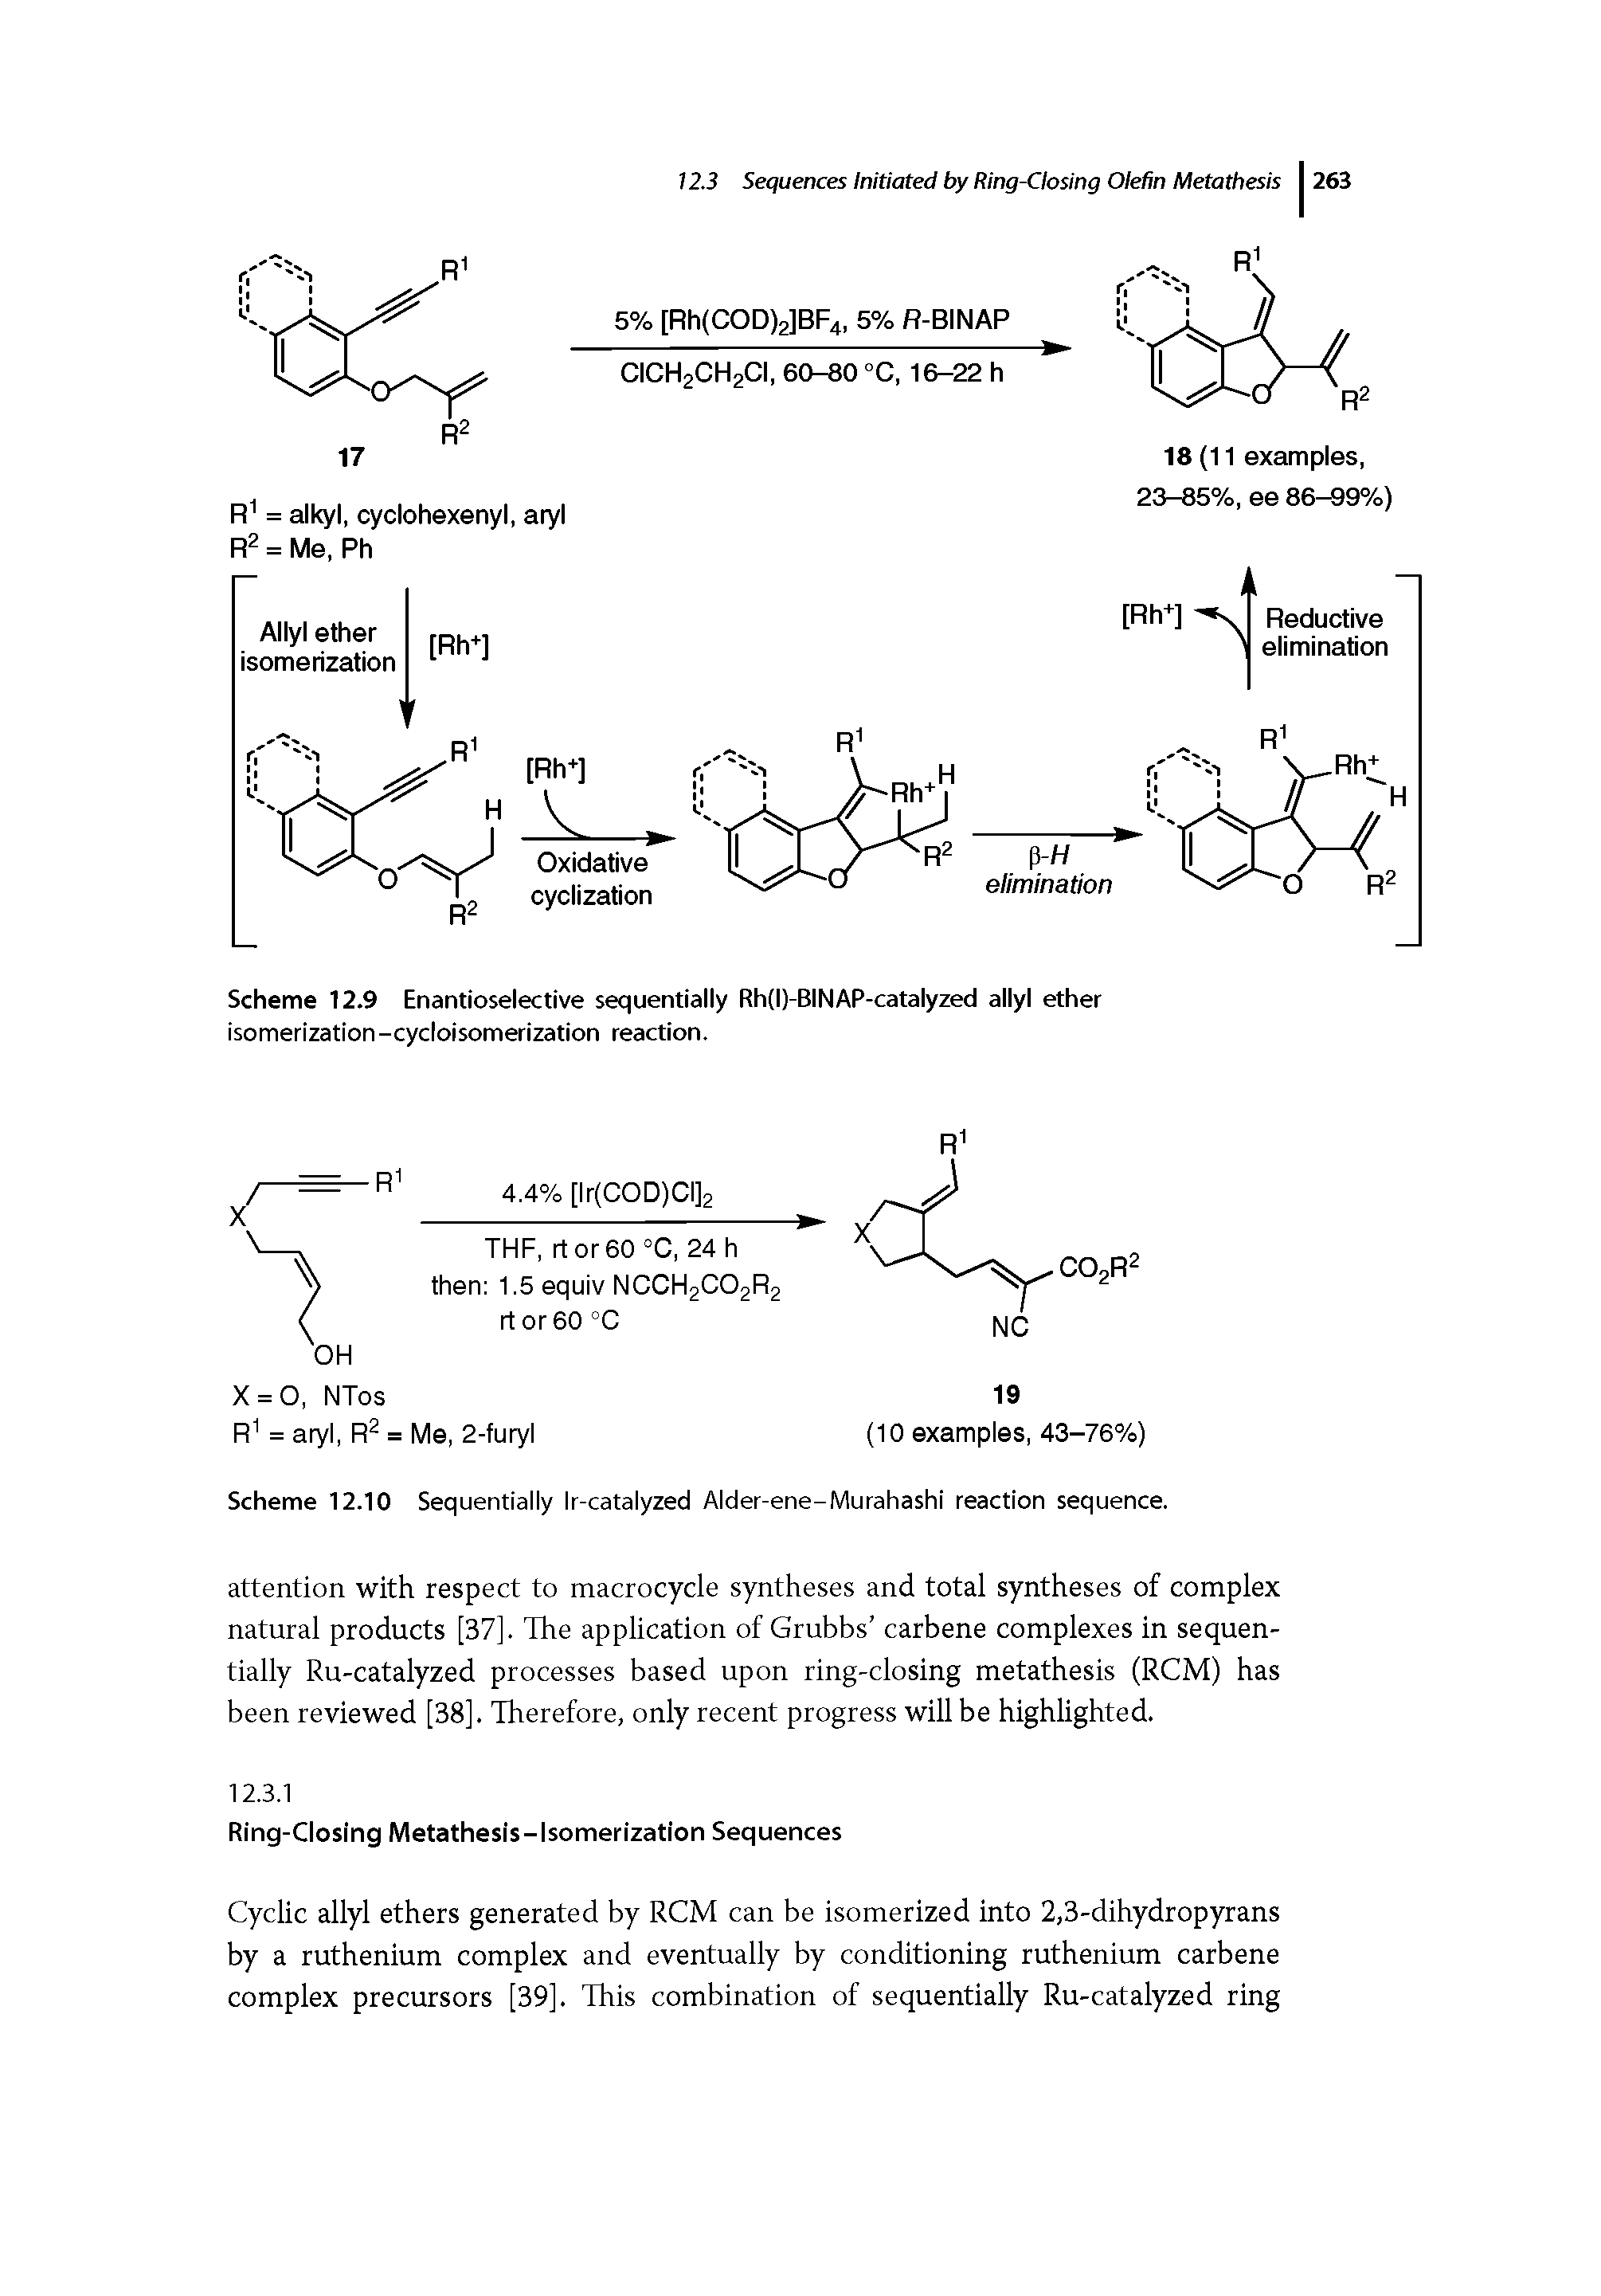 Scheme 12.10 Sequentially Ir-catalyzed Alder-ene-Murahashi reaction sequence.